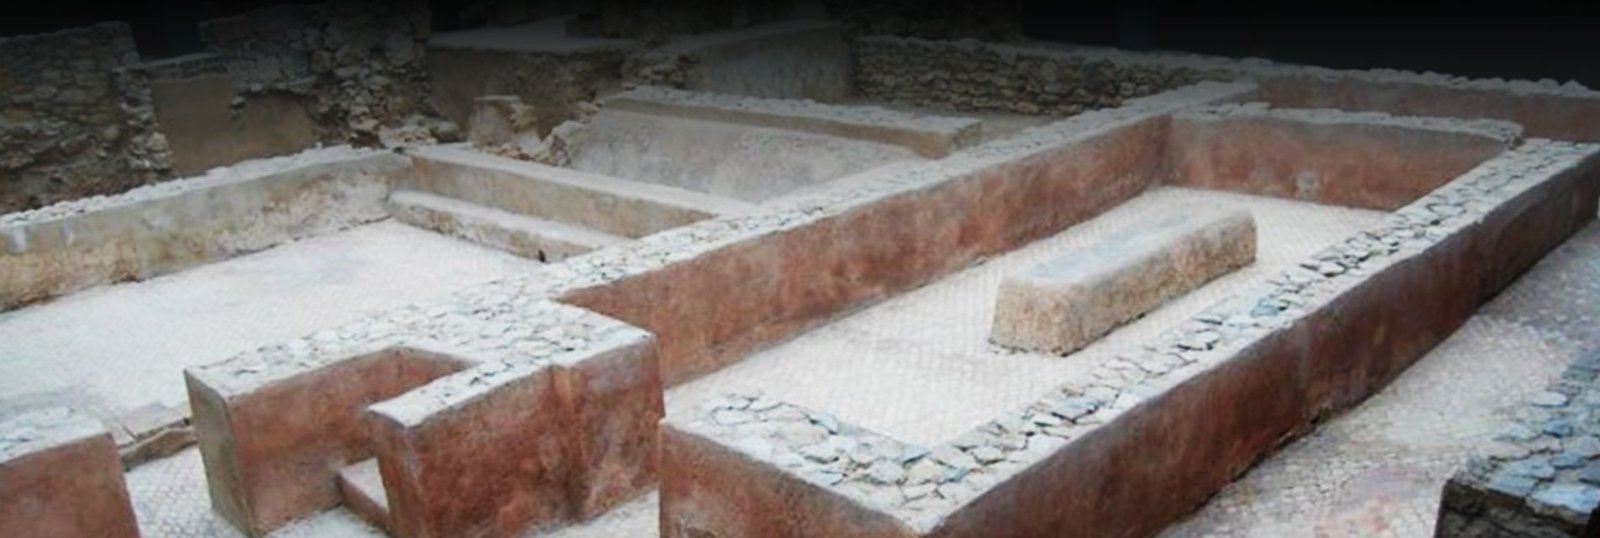 Centro arqueológico de L'Almoina header - Origenes de Europa